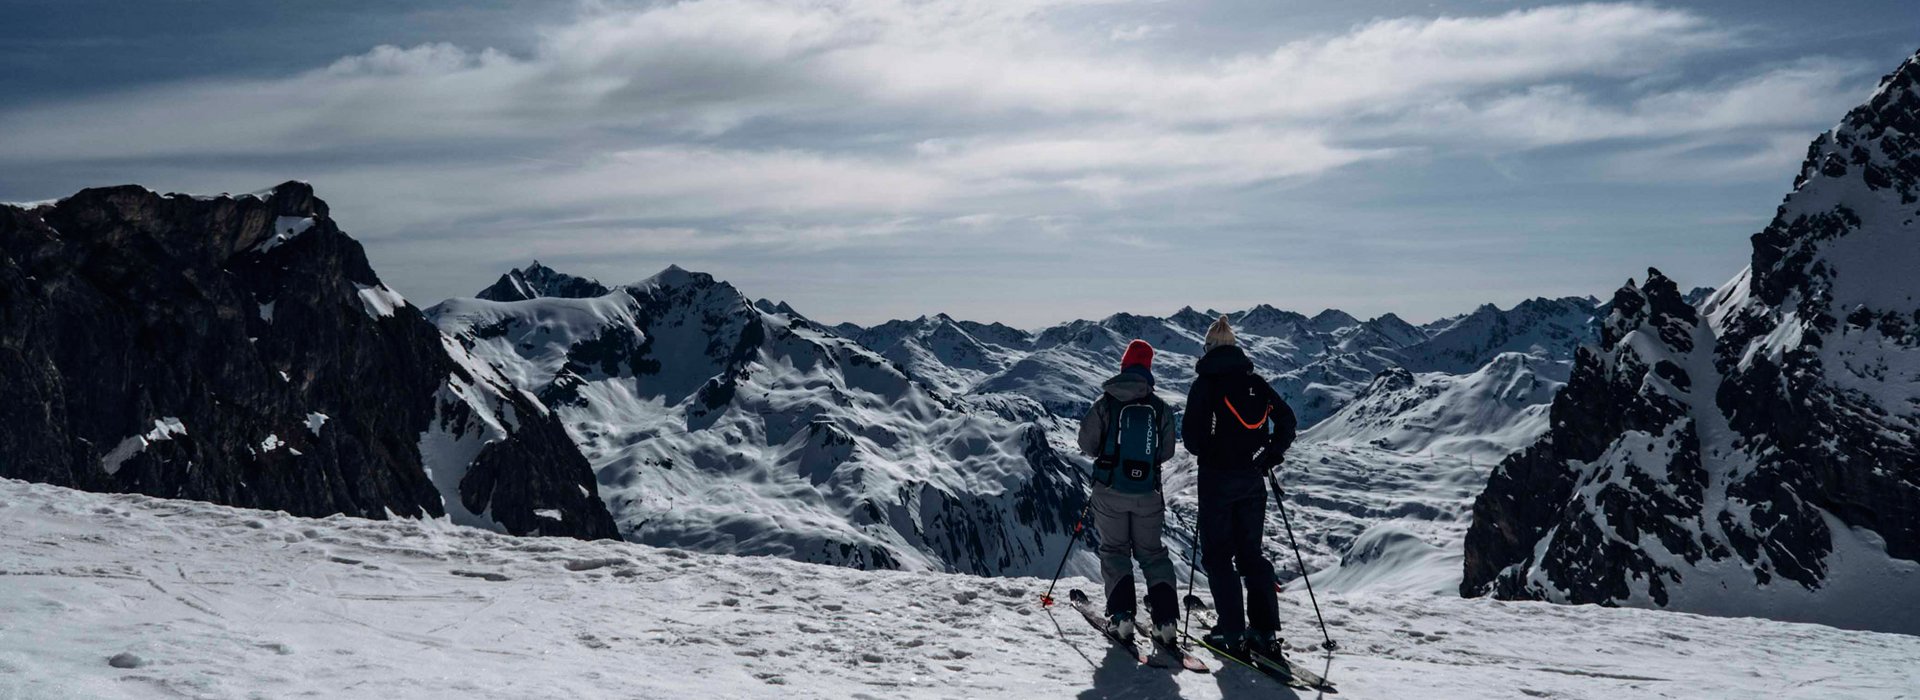 Skifahrer vor winterlichem Bergpanorama